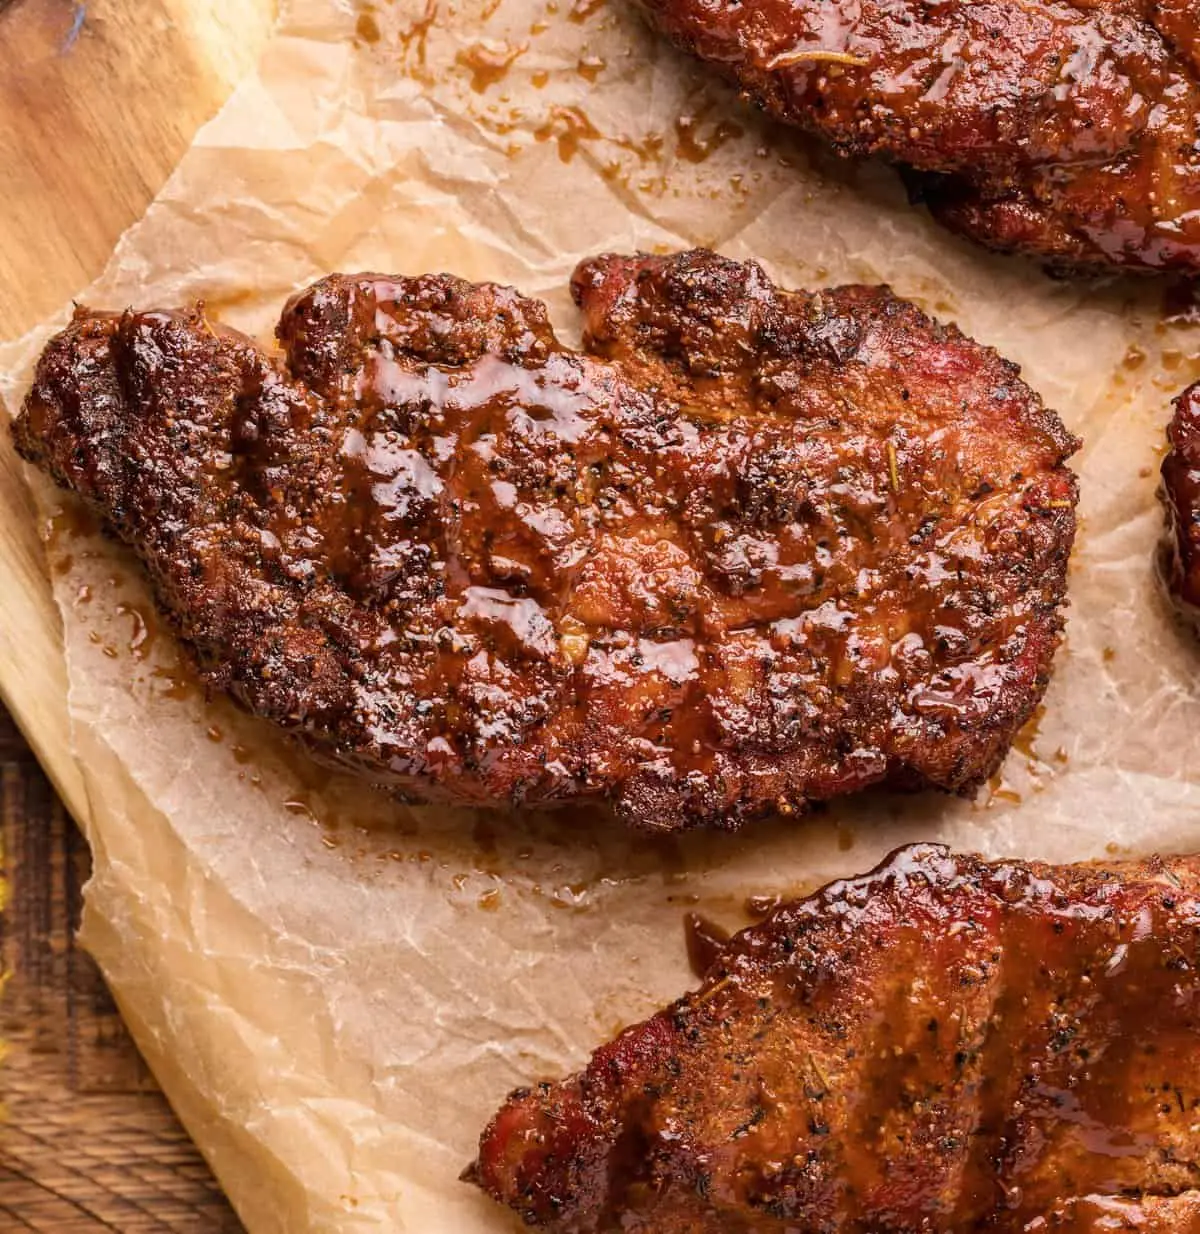 pork steak smoked - Should I brine pork steaks before smoking